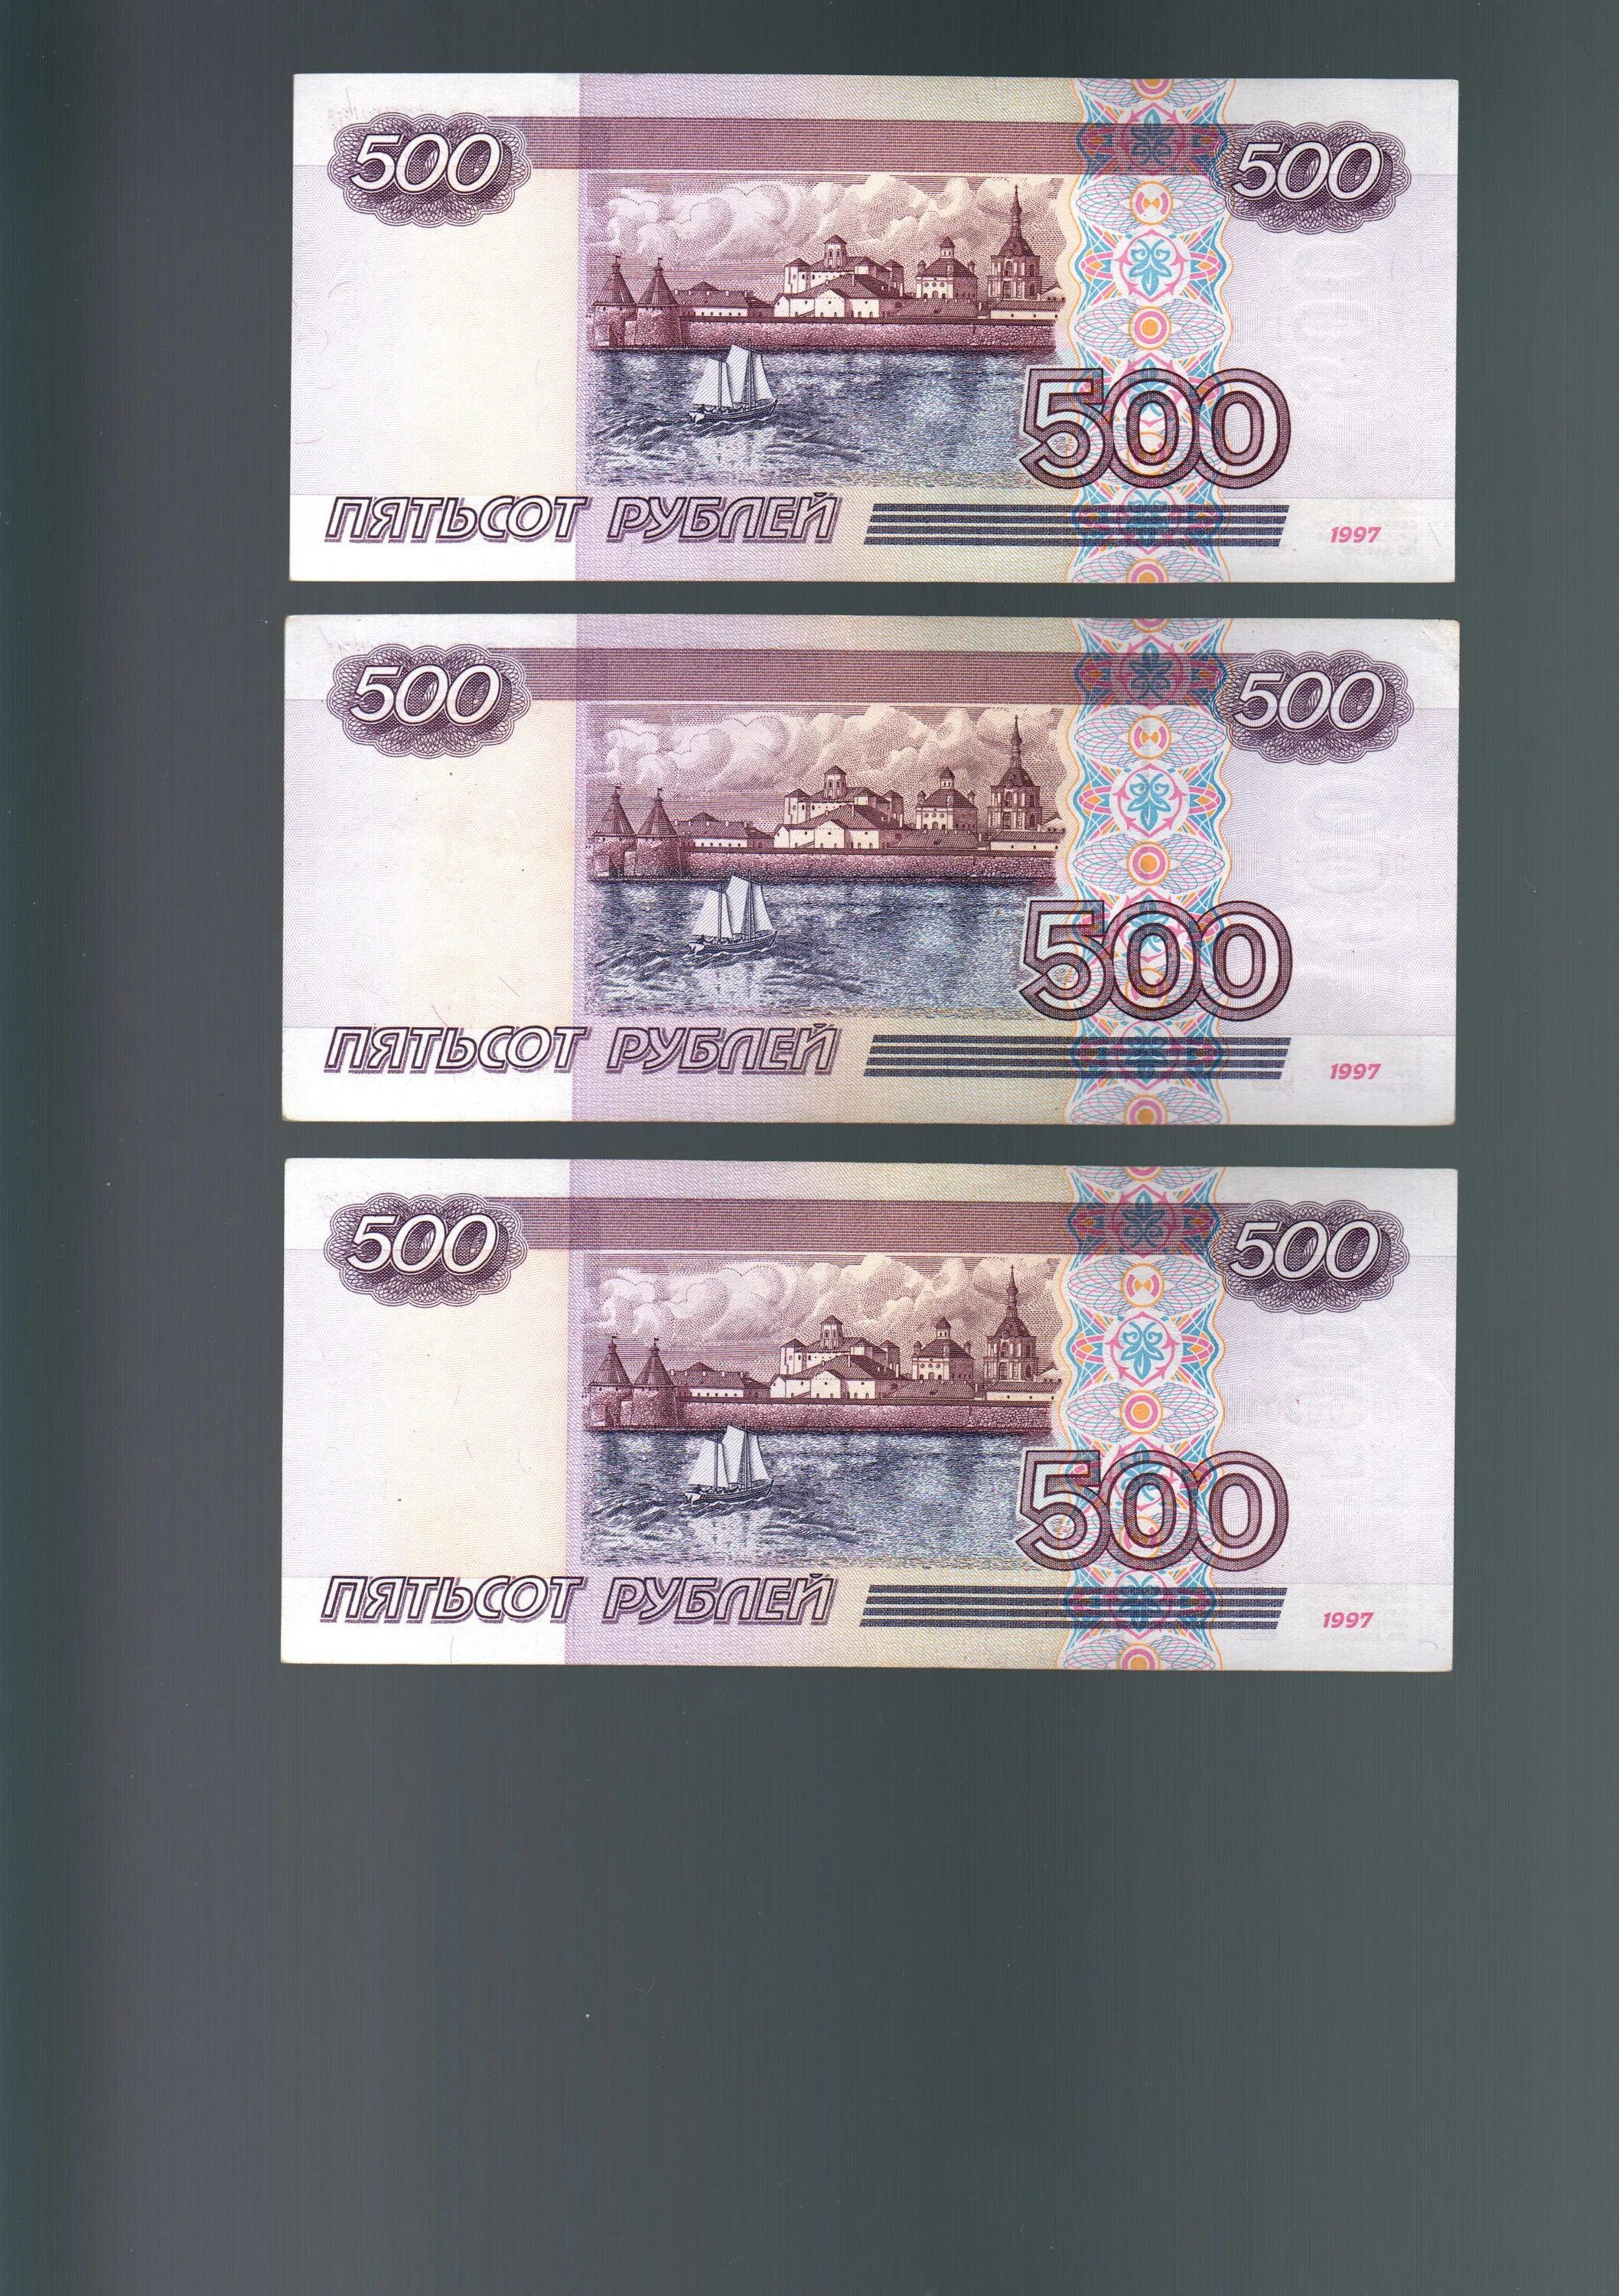 Купюры 1997 года Россия. Банкноты России 1997 года. Банкноты до 1997 года. Деньги до 1997 года в России. Купюры 1997г